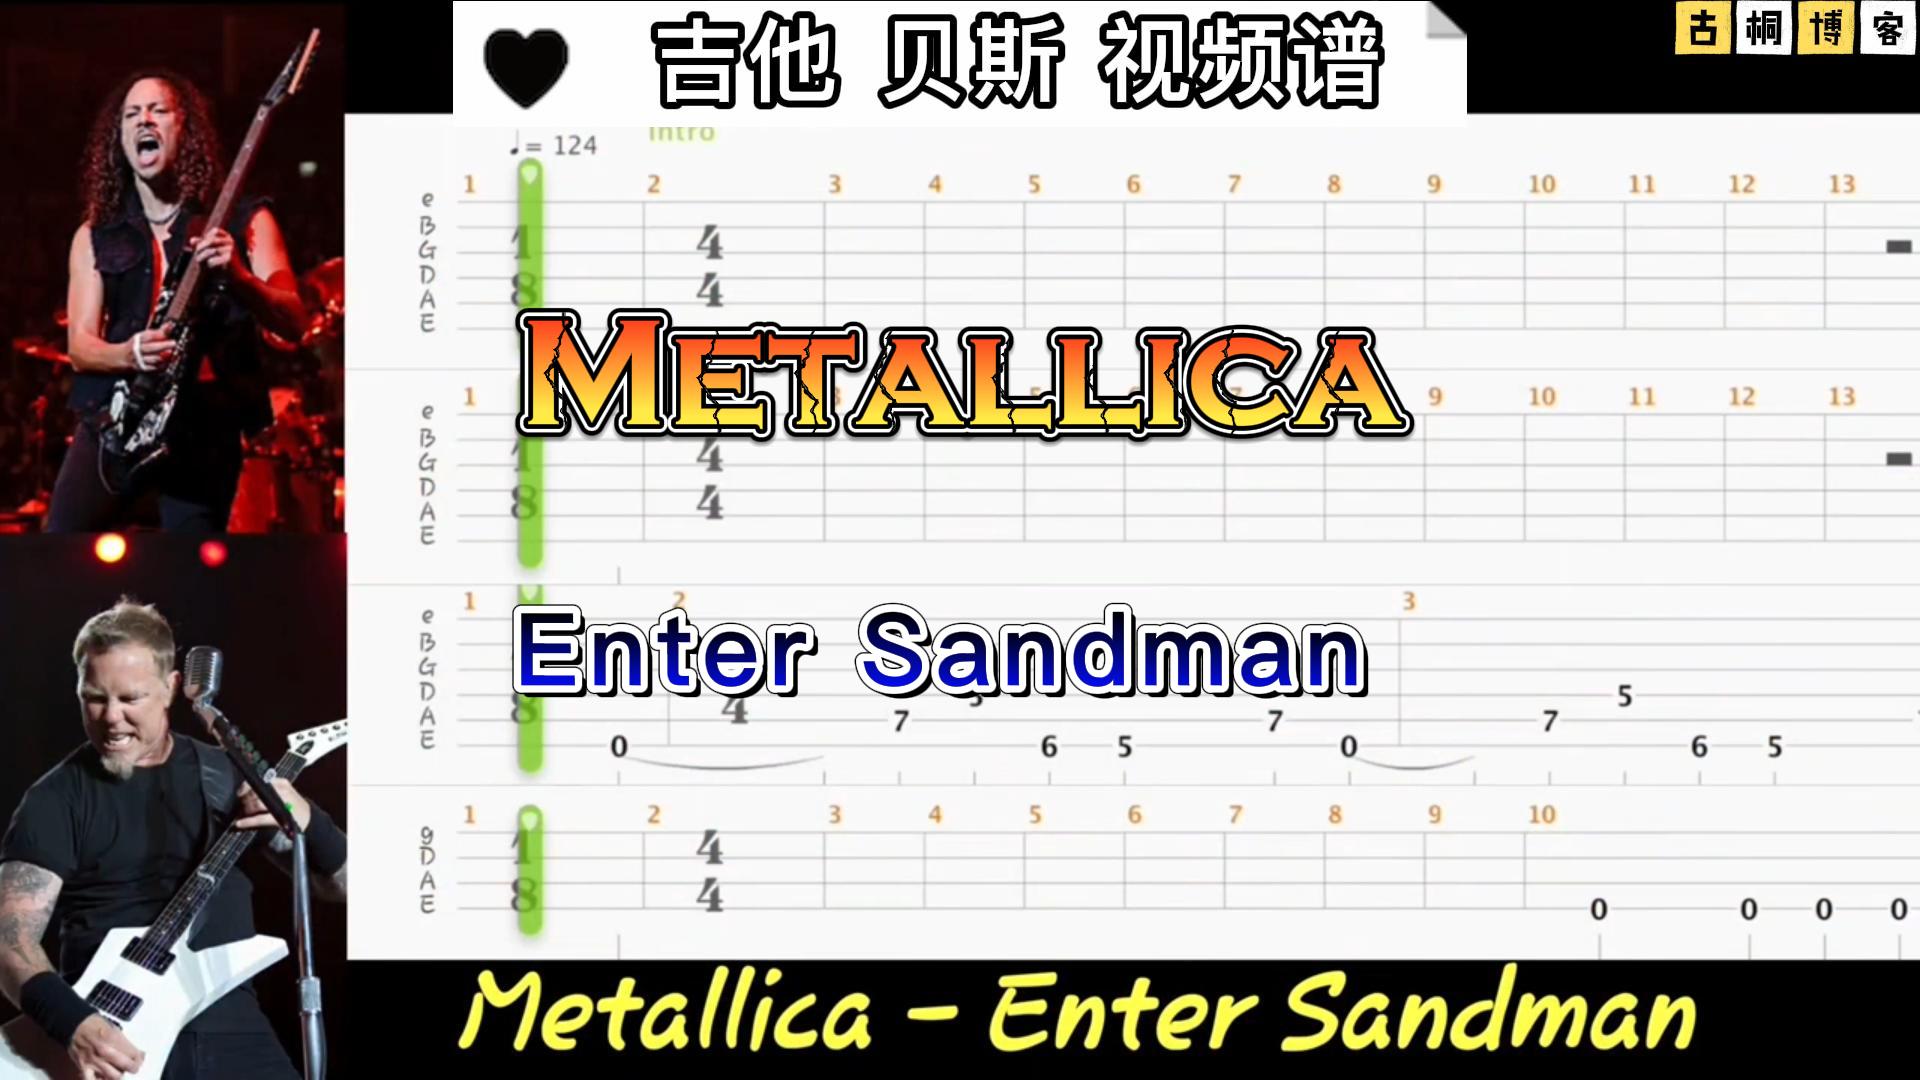 Metallica乐队经典《Enter Sandman》吉他 贝斯视频谱-古桐博客